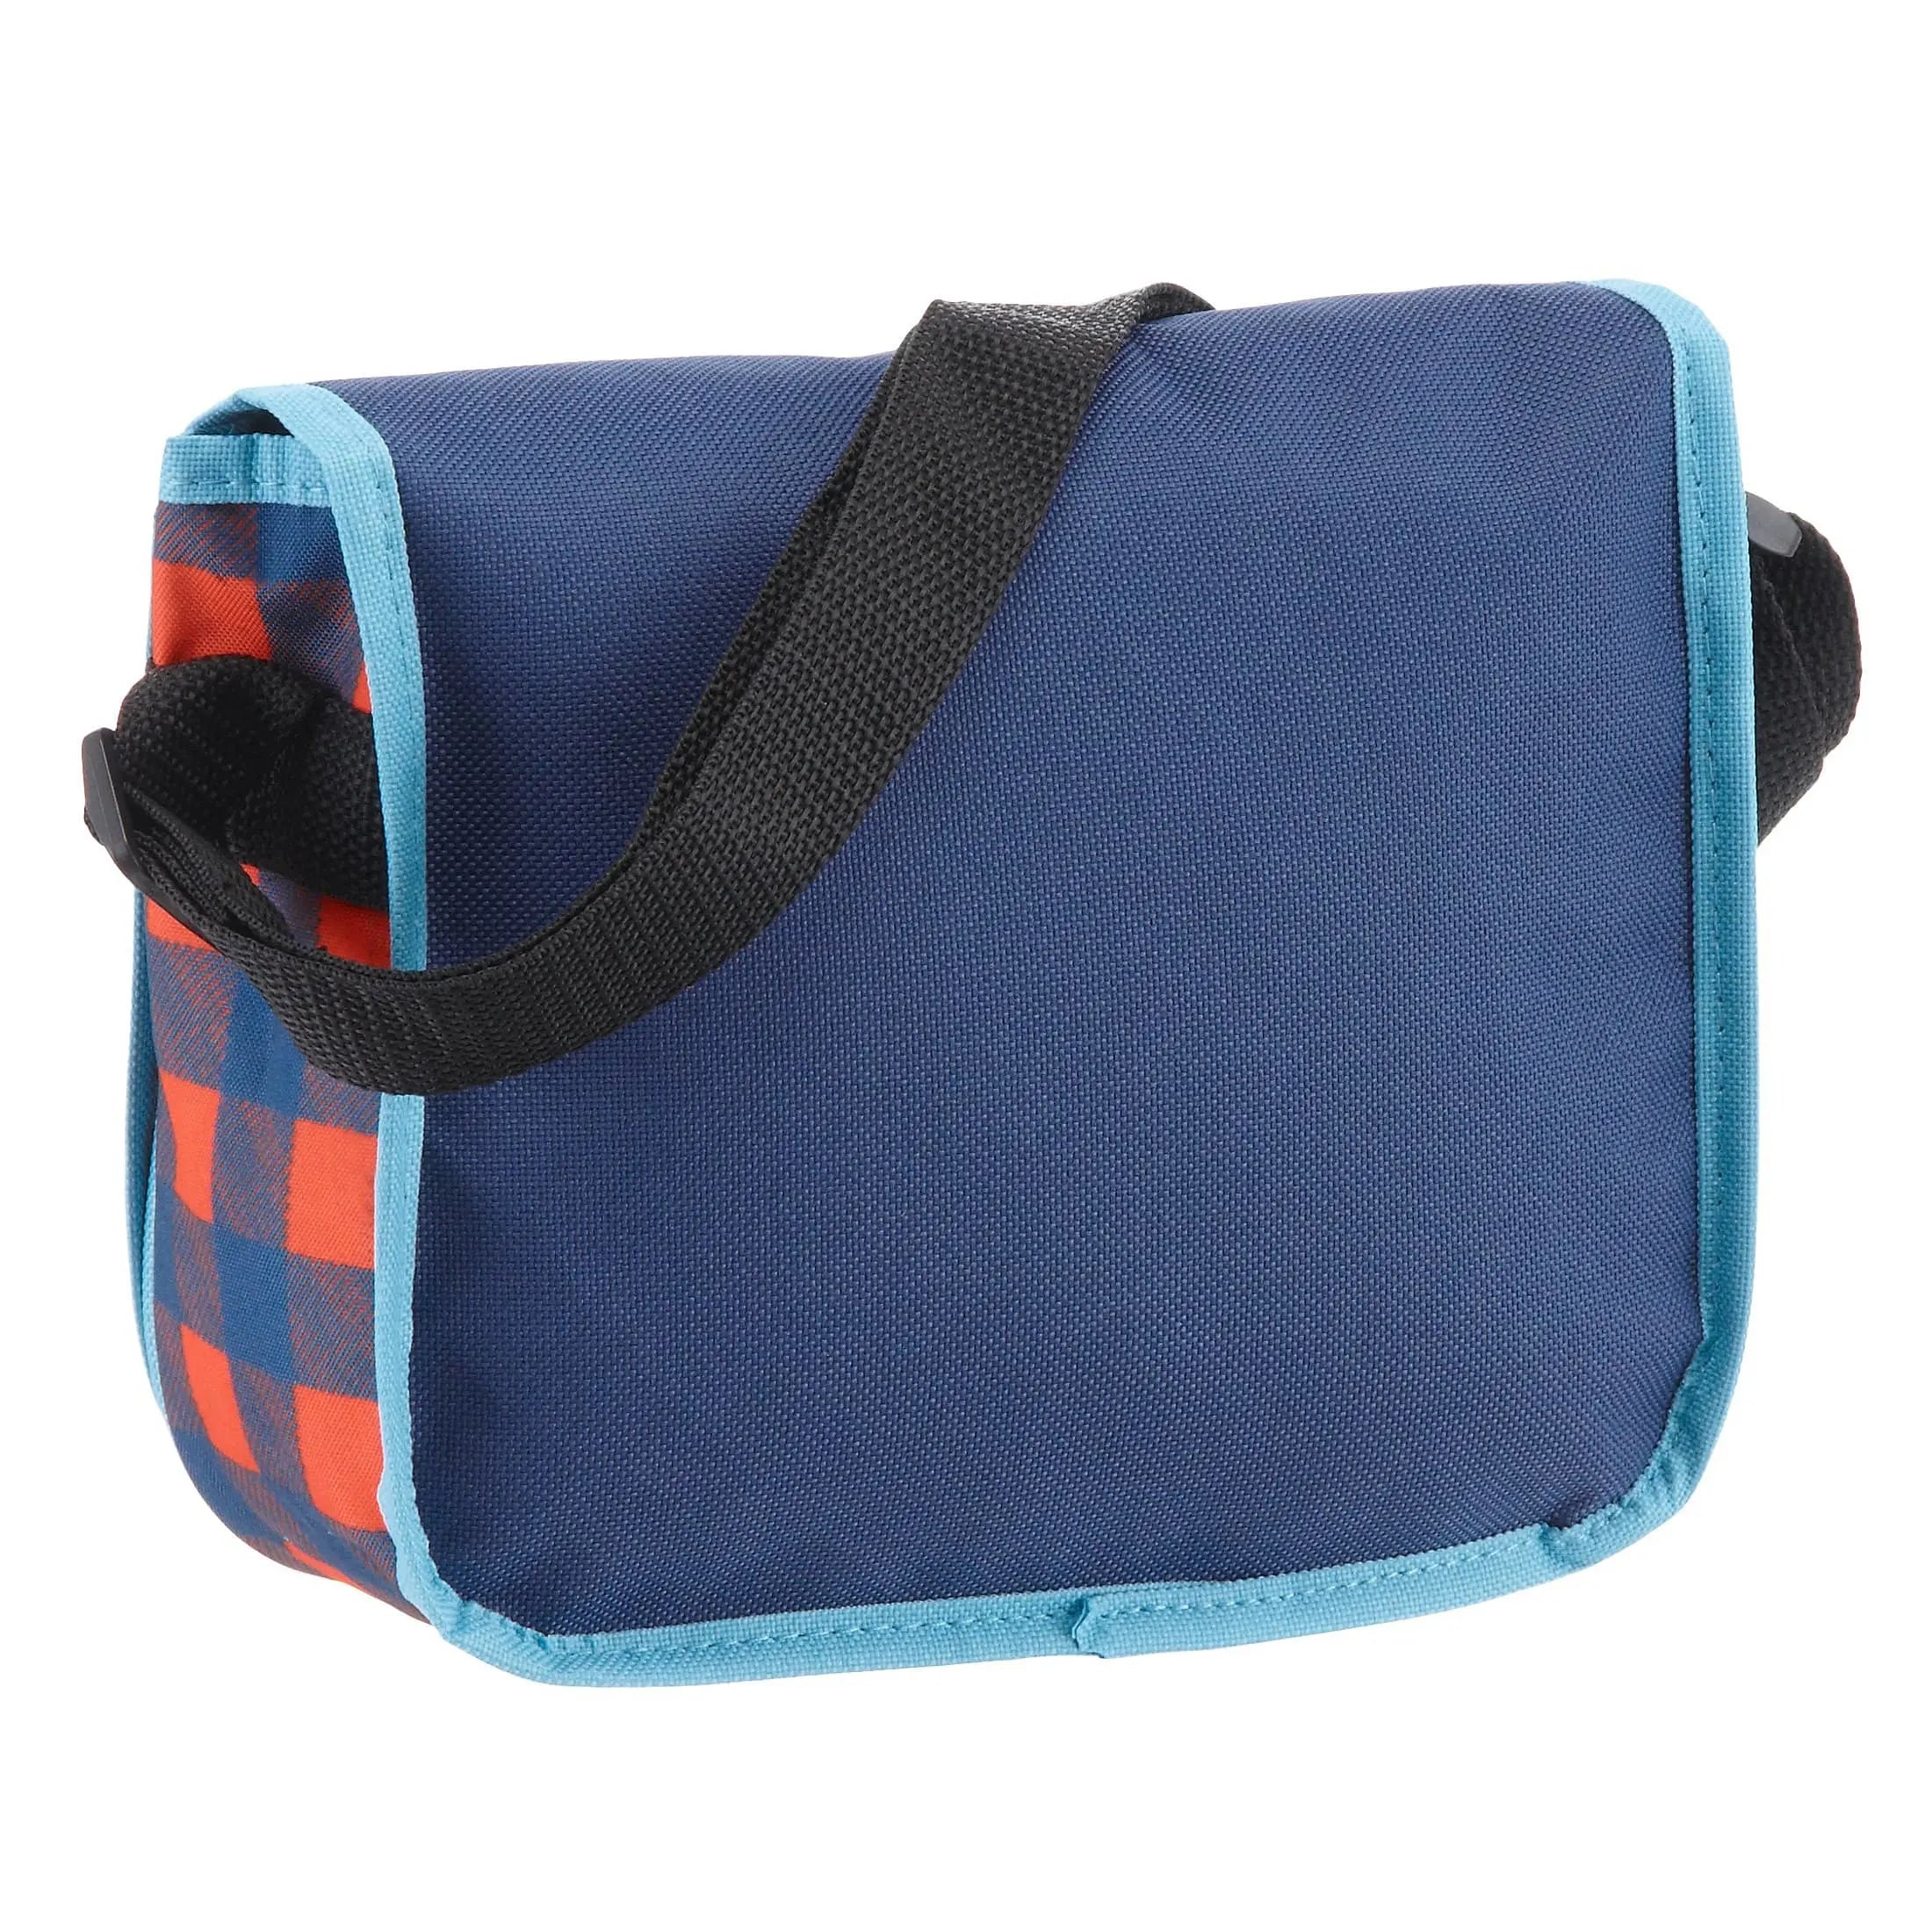 Fabrizio Minions children's bag 21 cm - fire red/navy blue